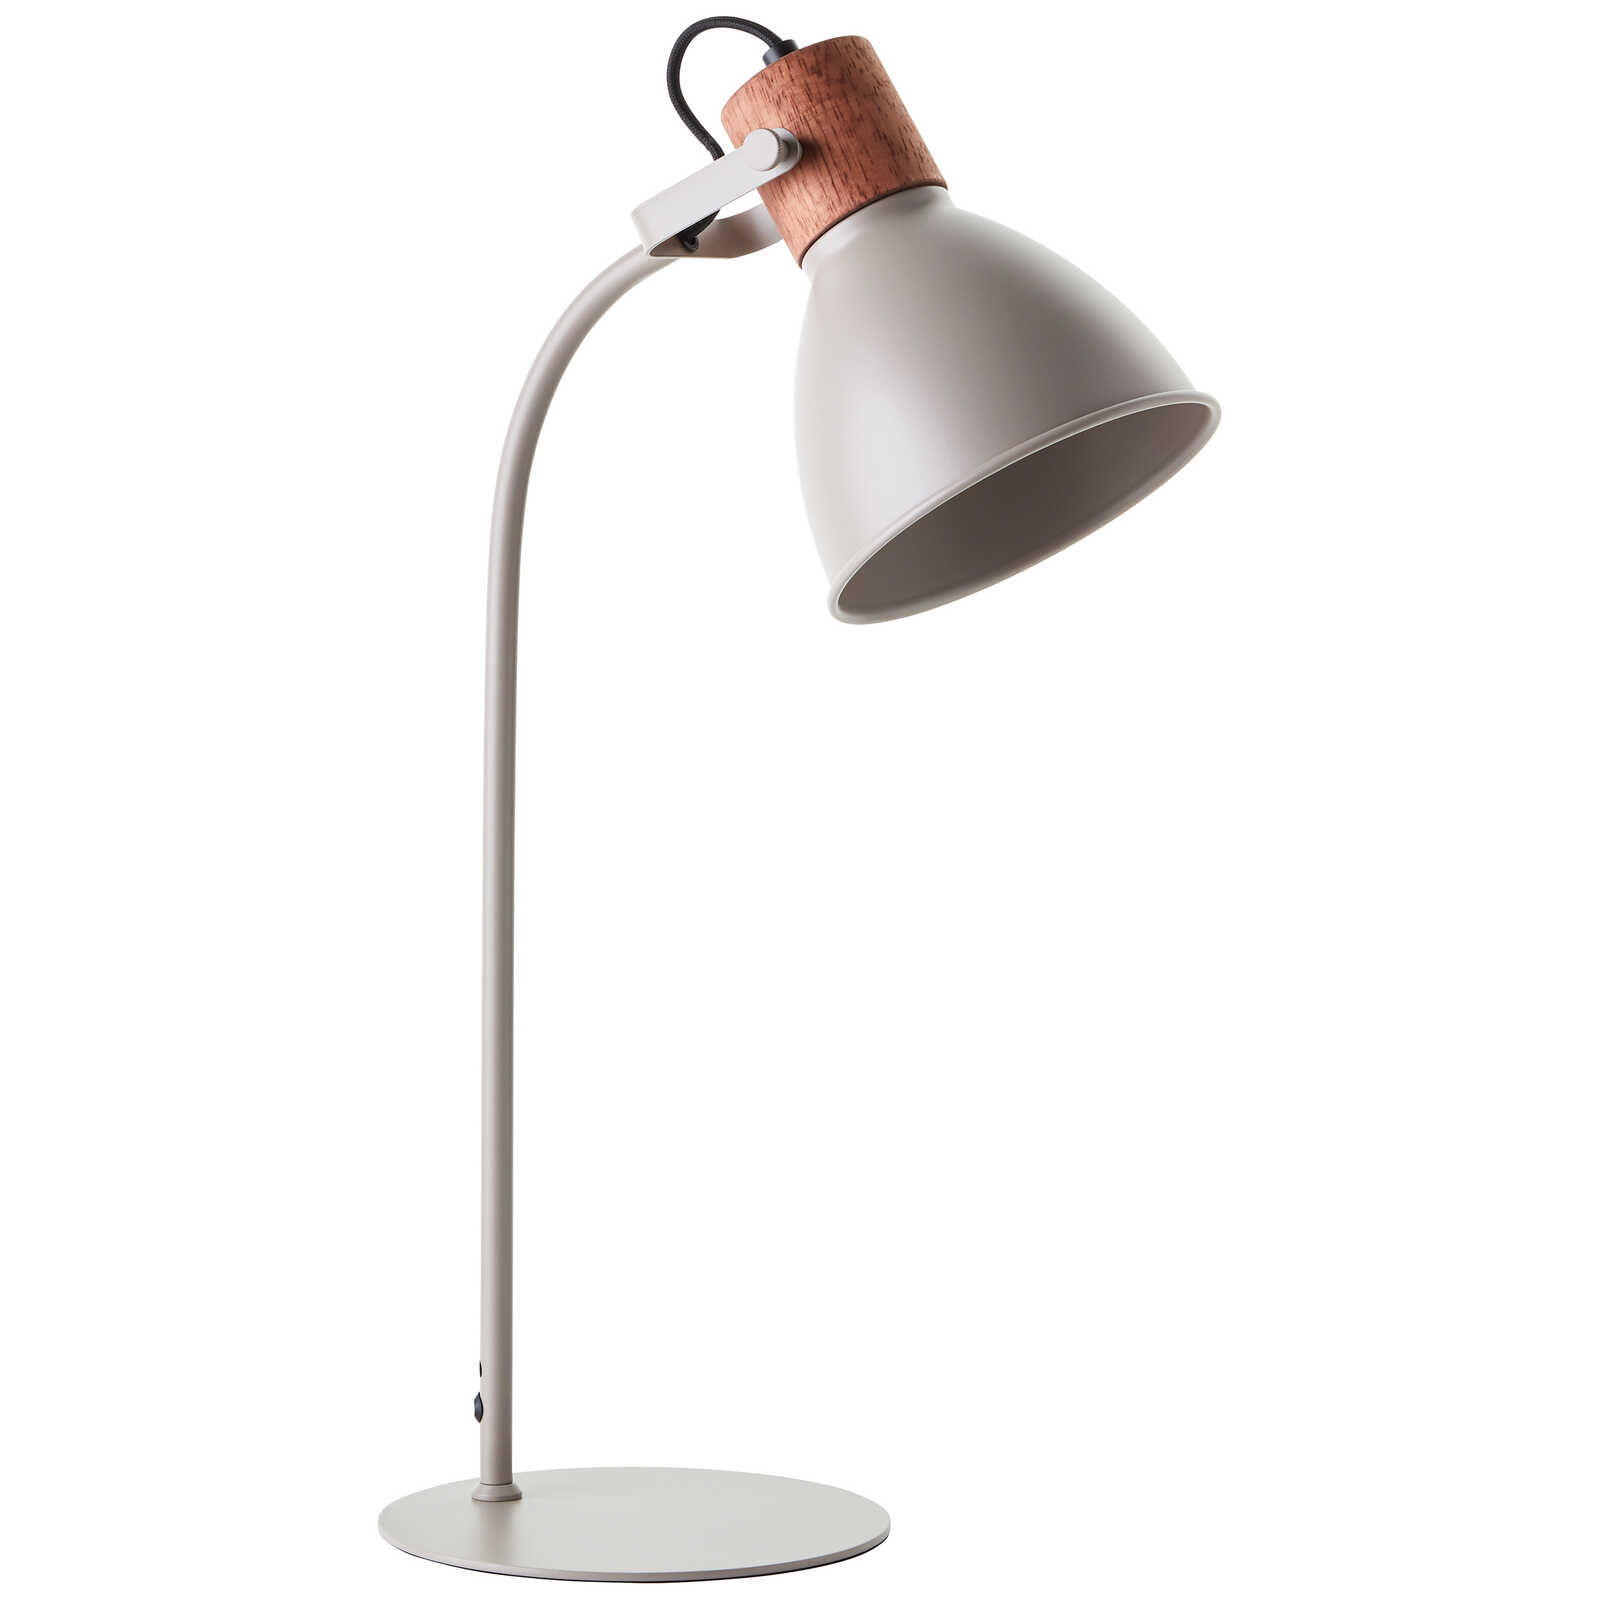             Houten tafellamp - Franziska 3 - Grijs
        